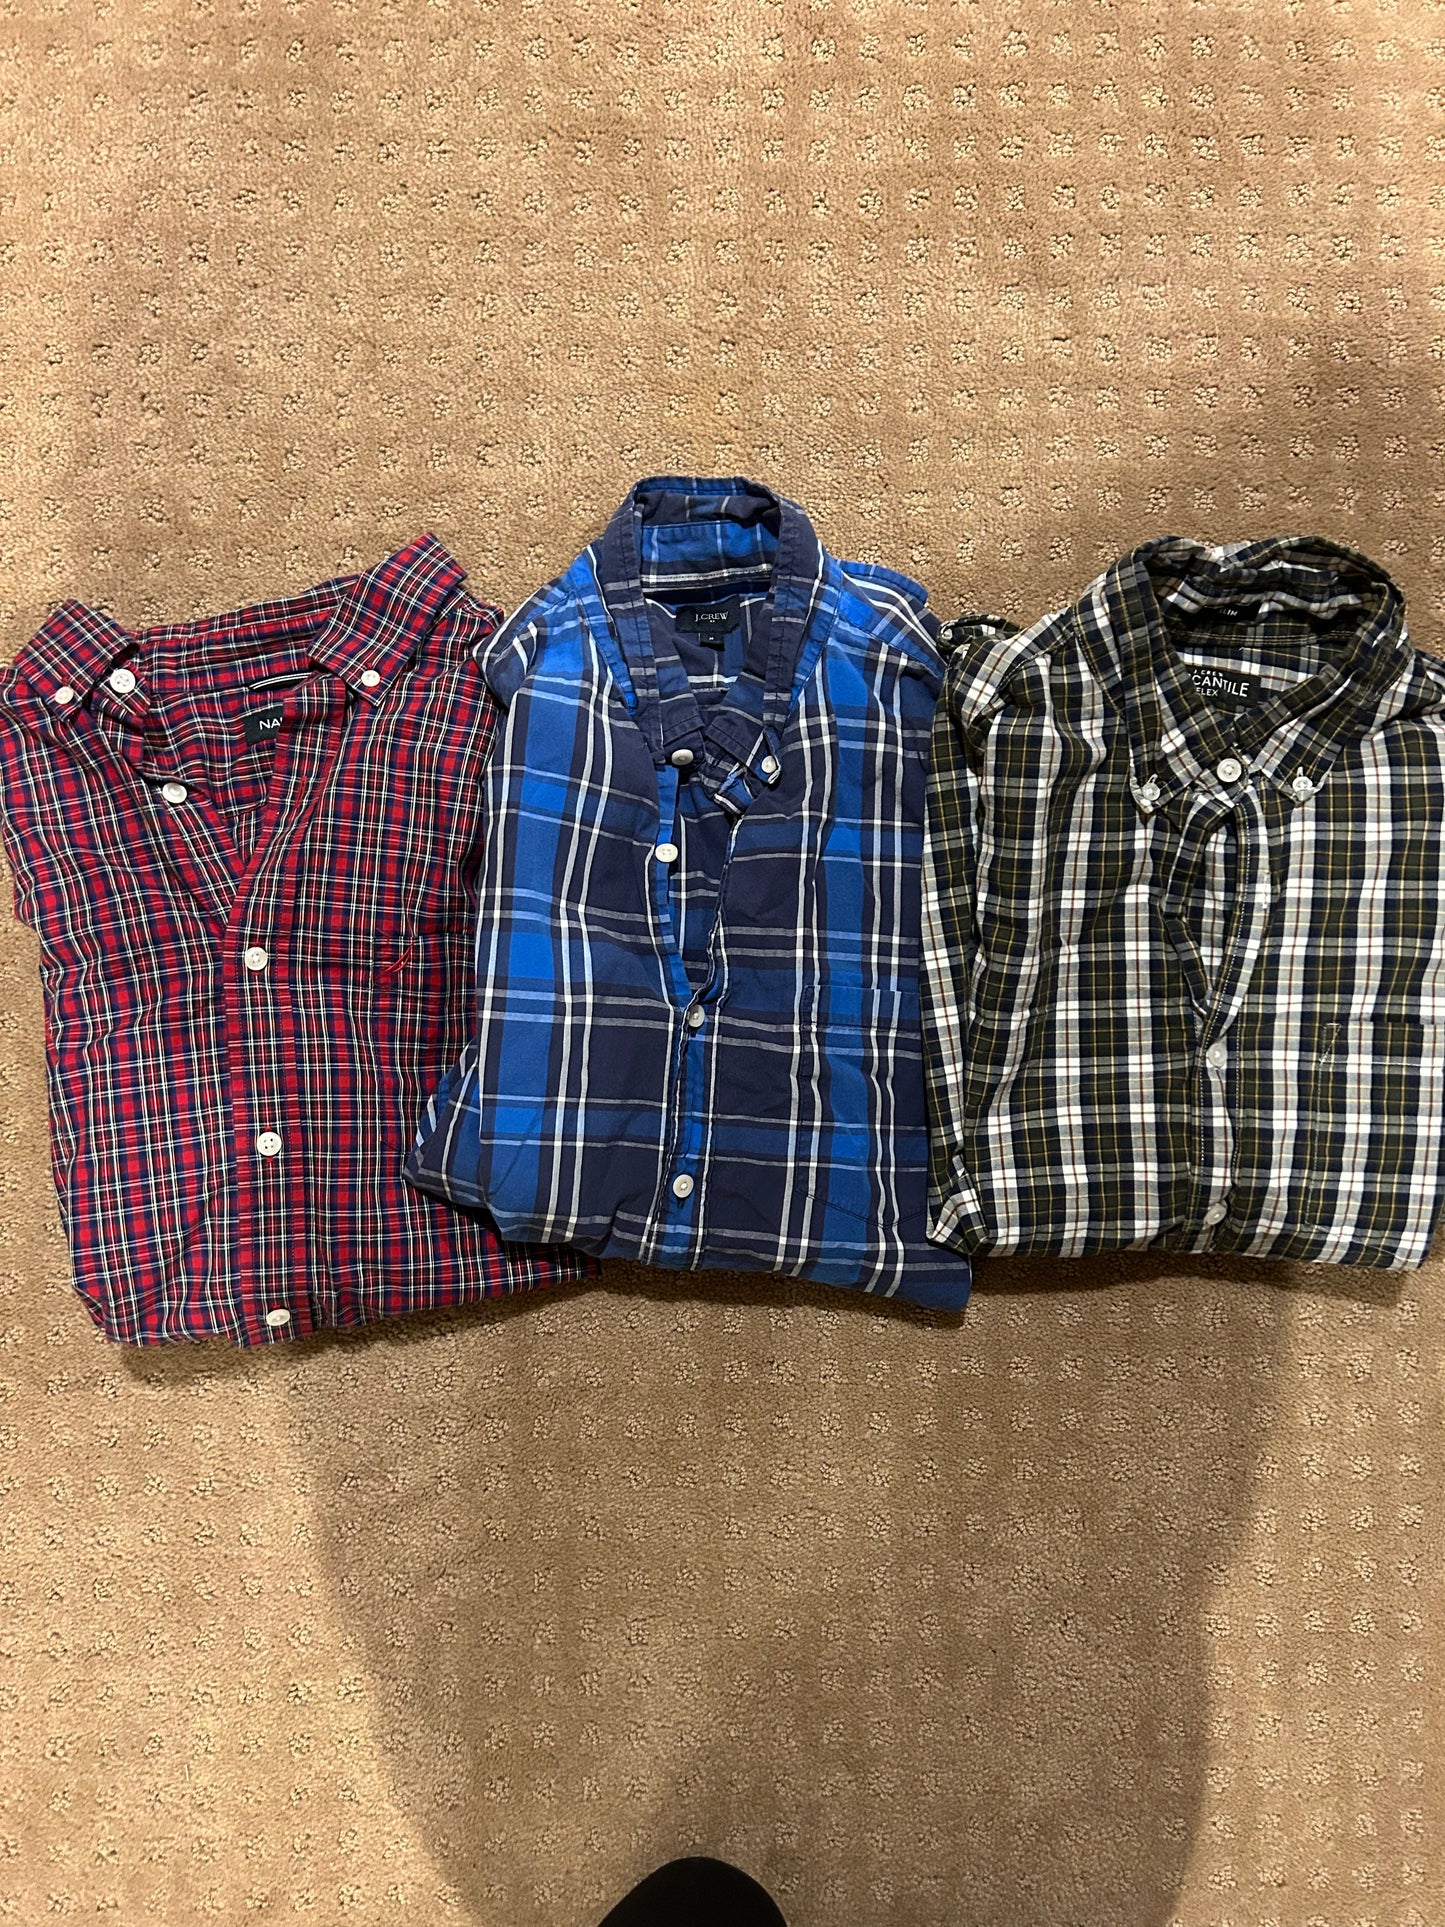 Set of 3 Men’s Shirts Jcrew and Nautica Size M